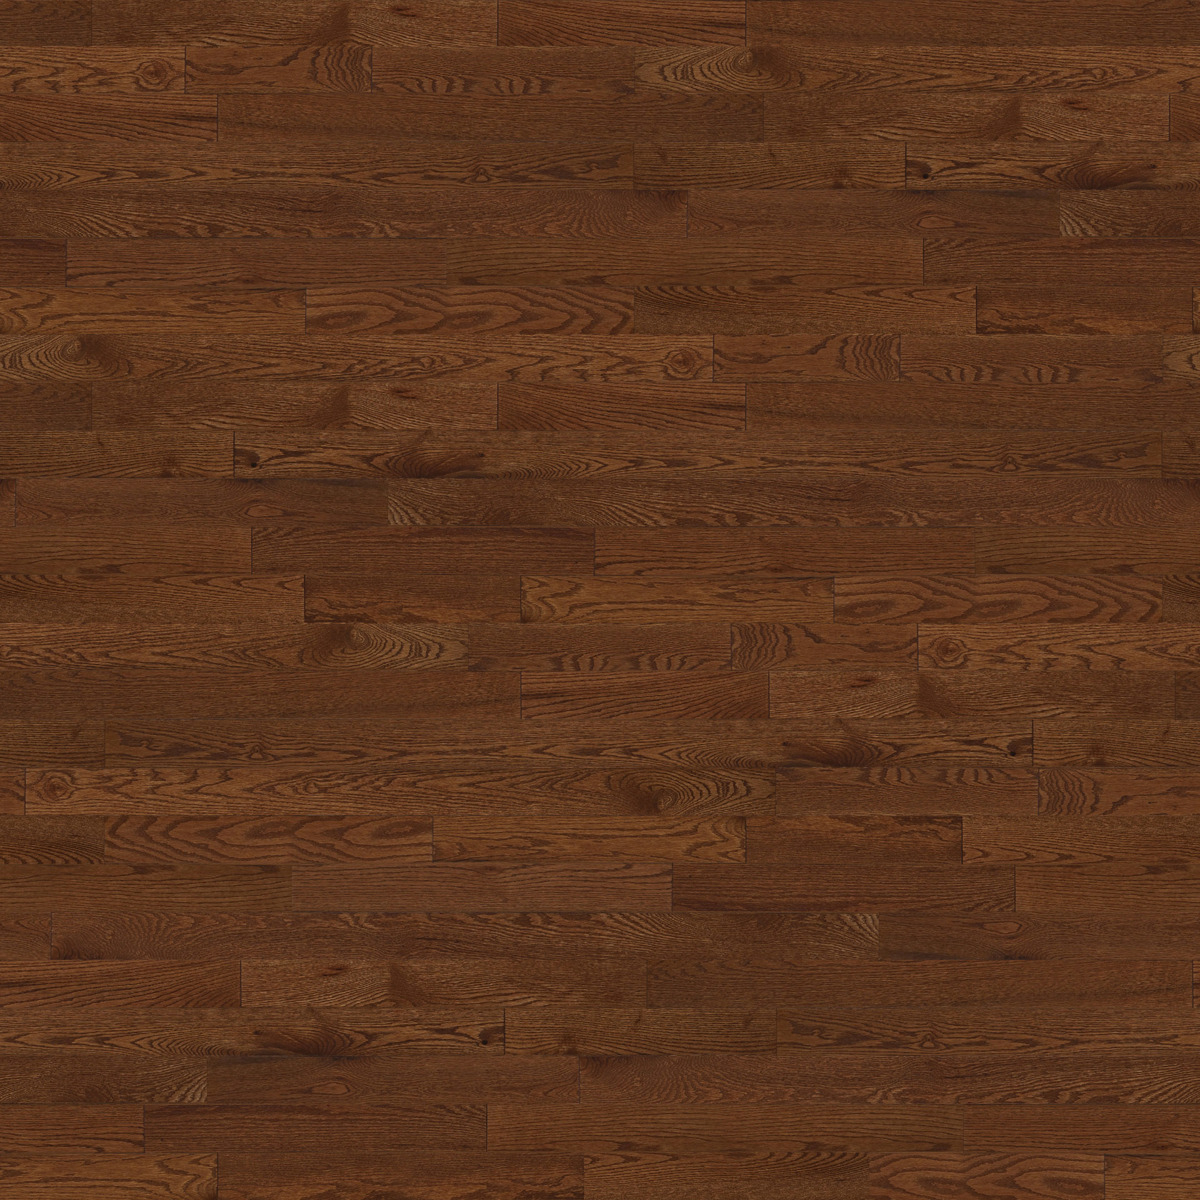 Red Oak Solid Hardwood Flooring 3 1 4, Oak Hardwood Flooring 3 1 4